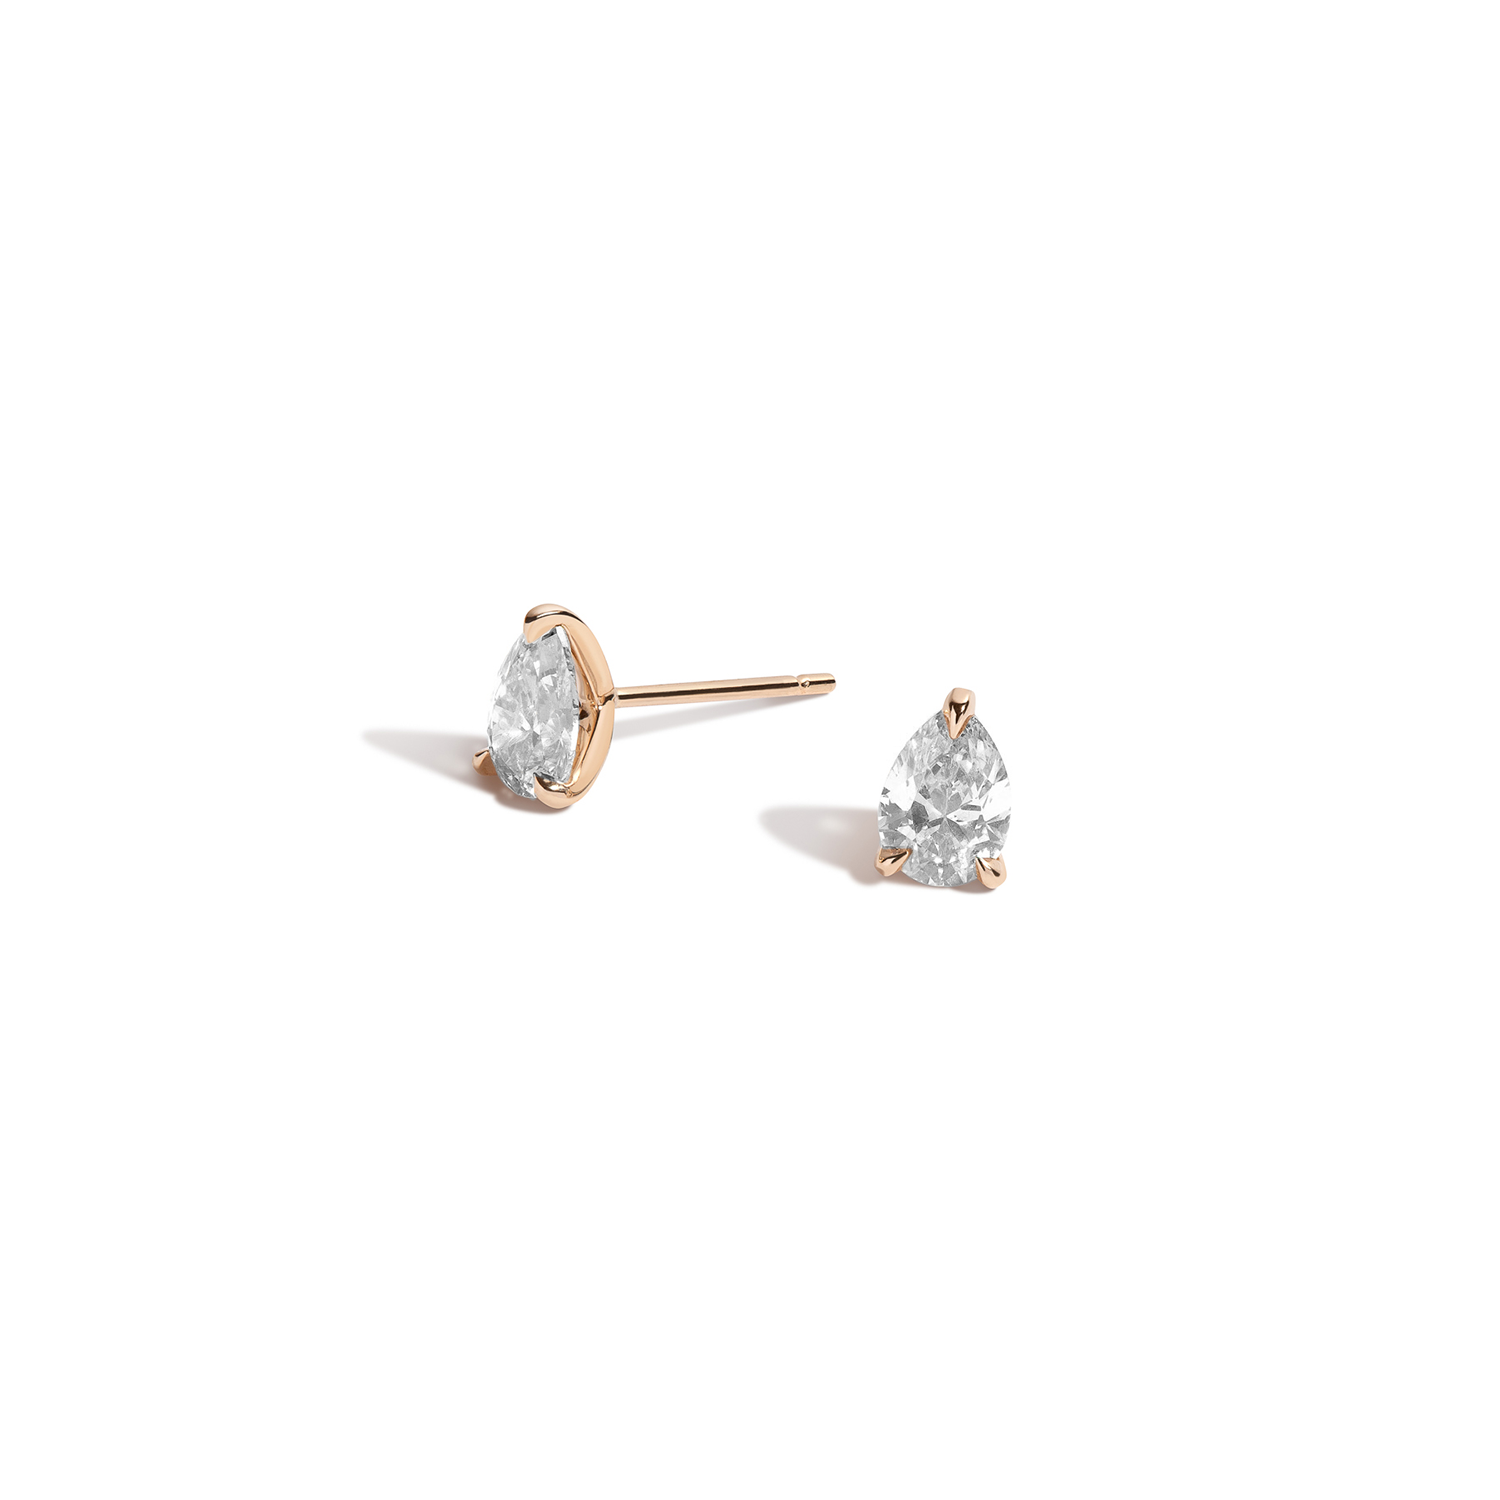 Shahla Karimi Medium Pear Diamond Earrings in 14K Yellow Gold